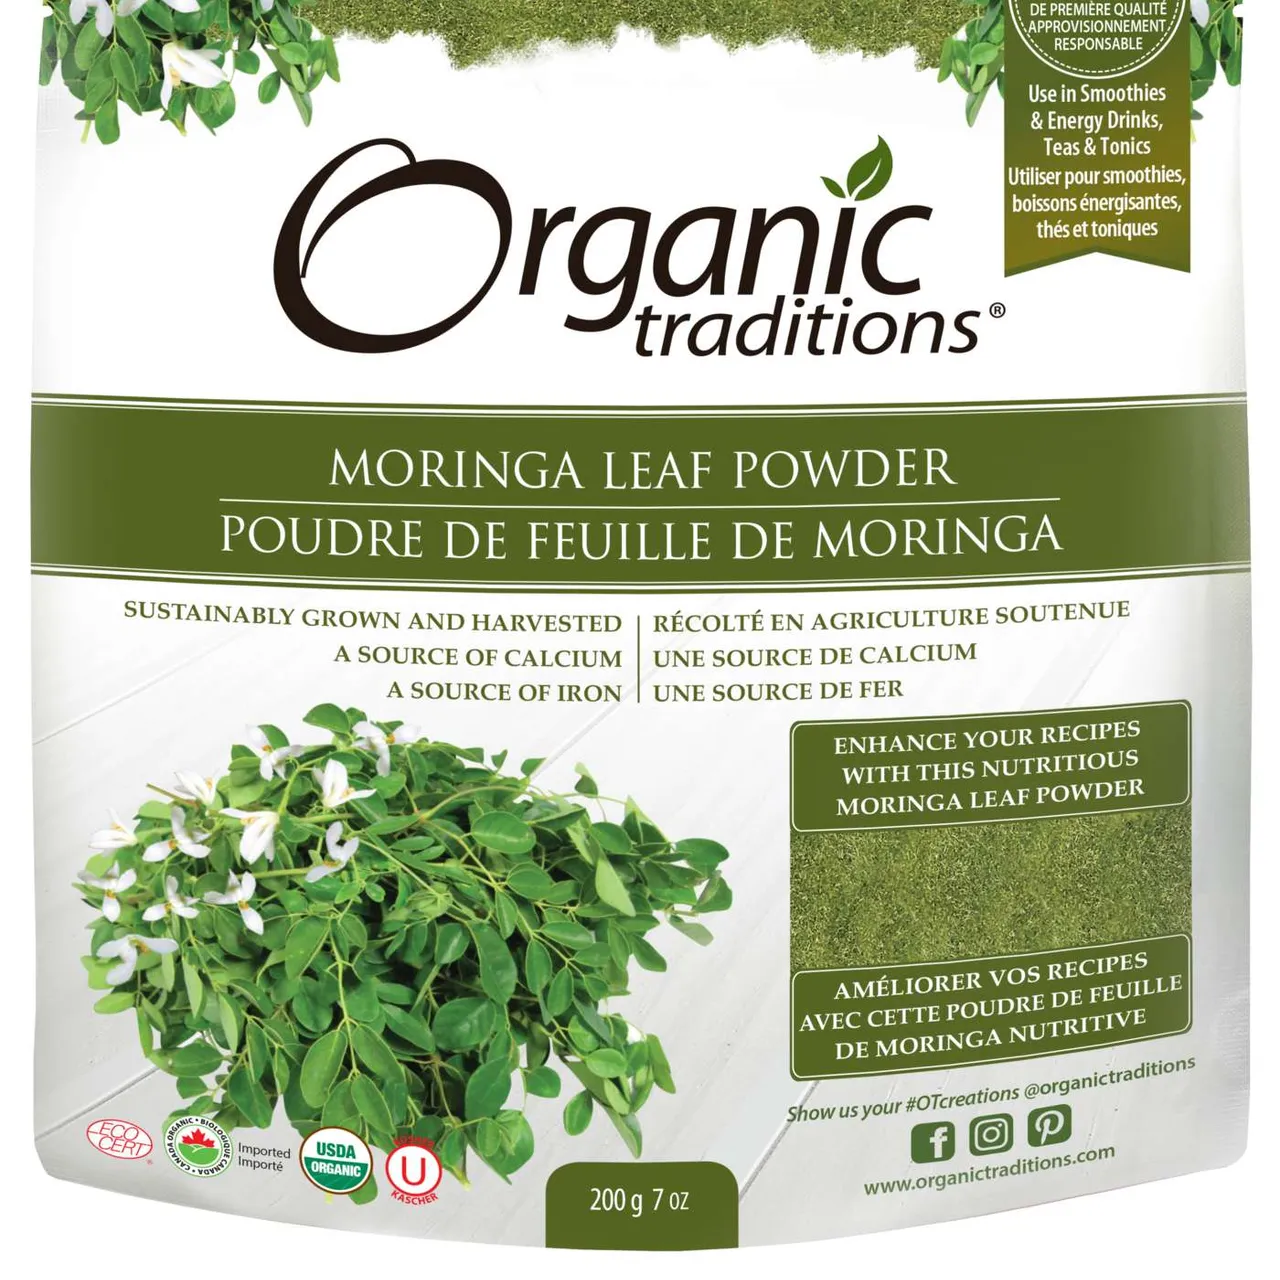 Organic Traditions Moringa Leaf Powder photo 1